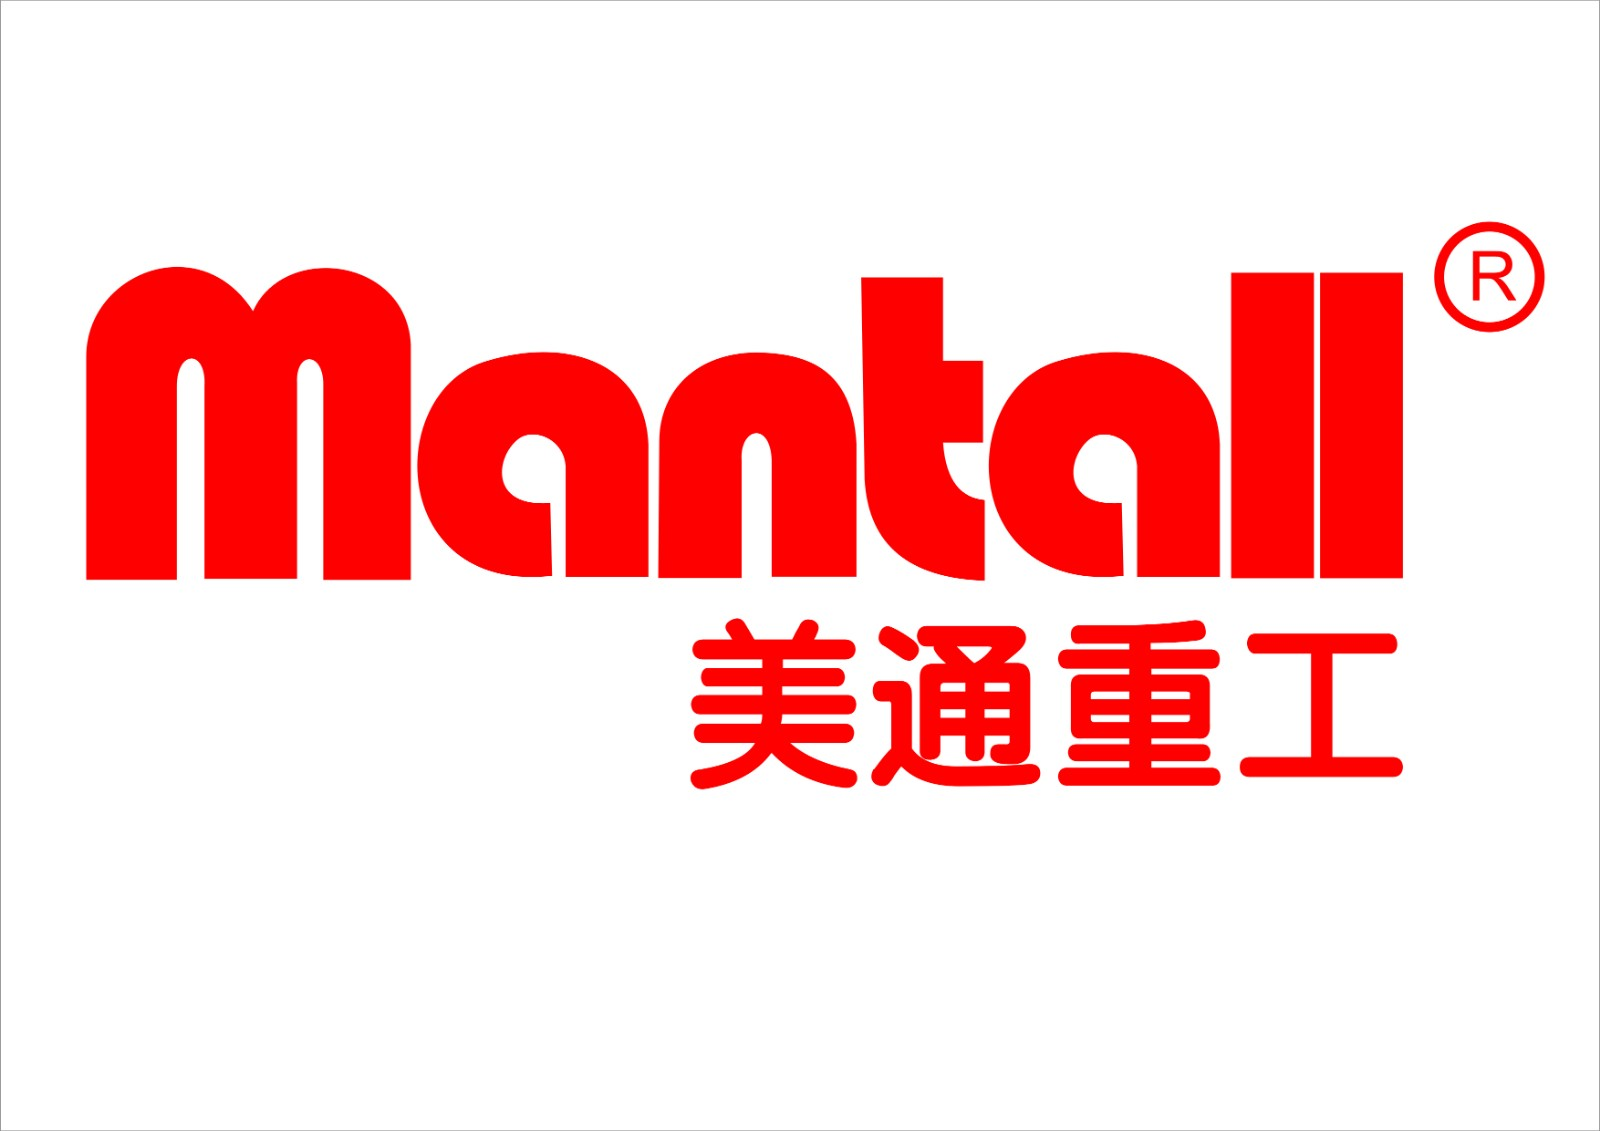 Mantall (Nantong) Heavy Industry Co.,Ltd.